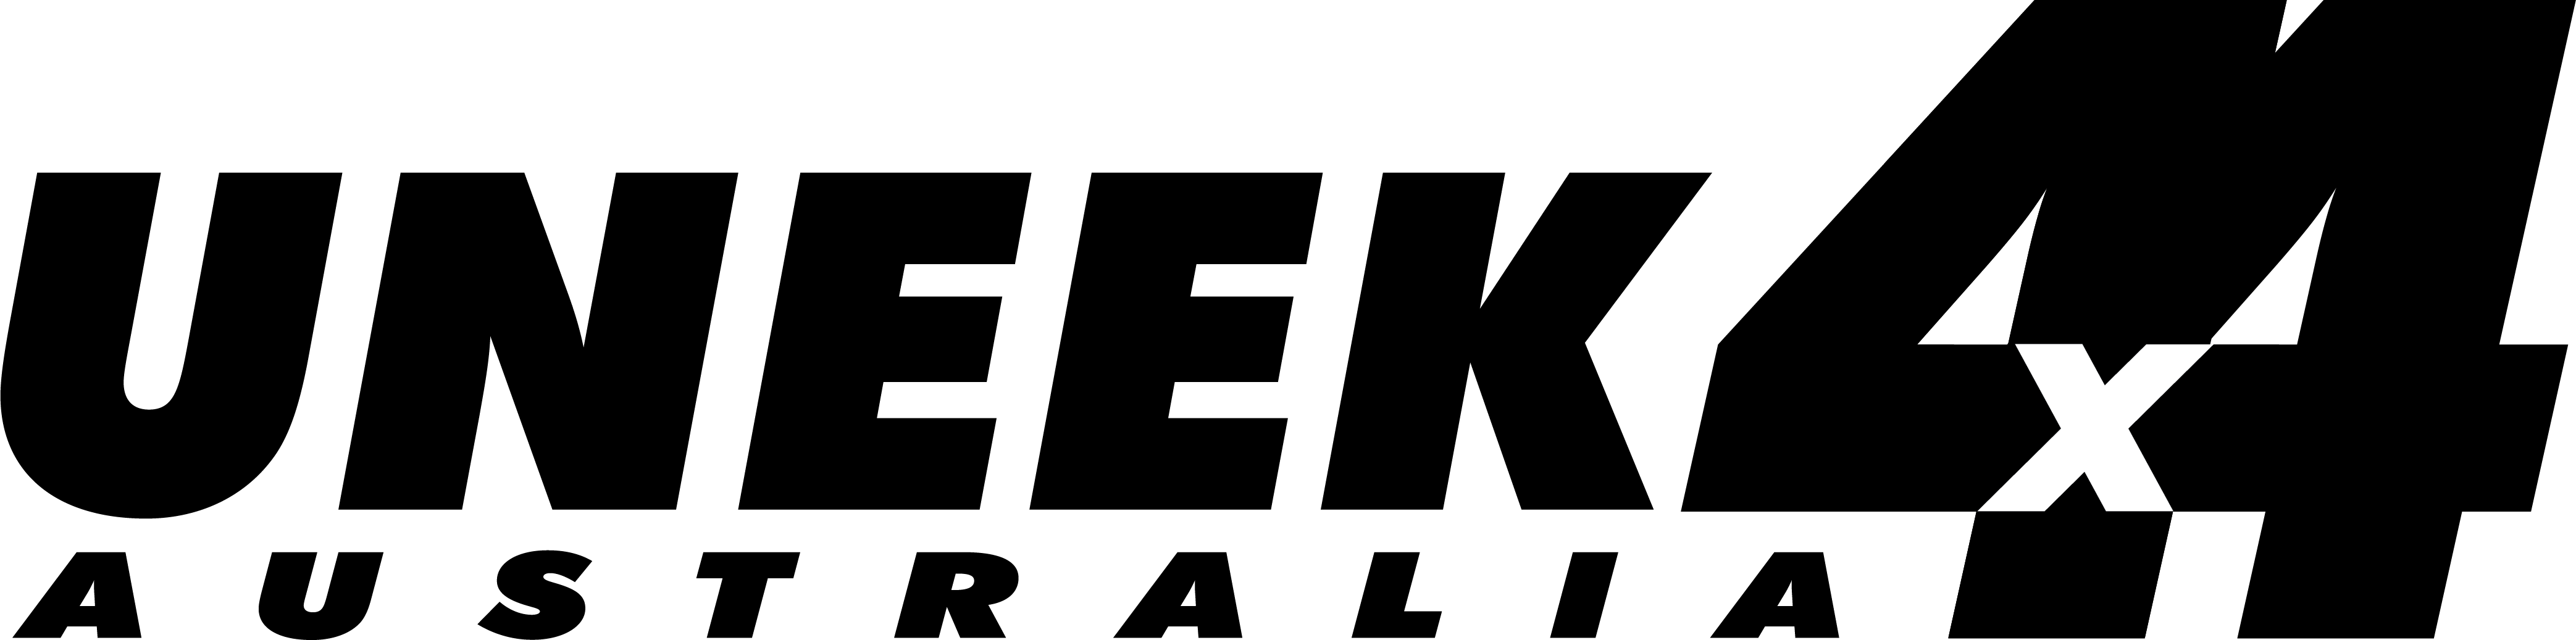 Uneek logo